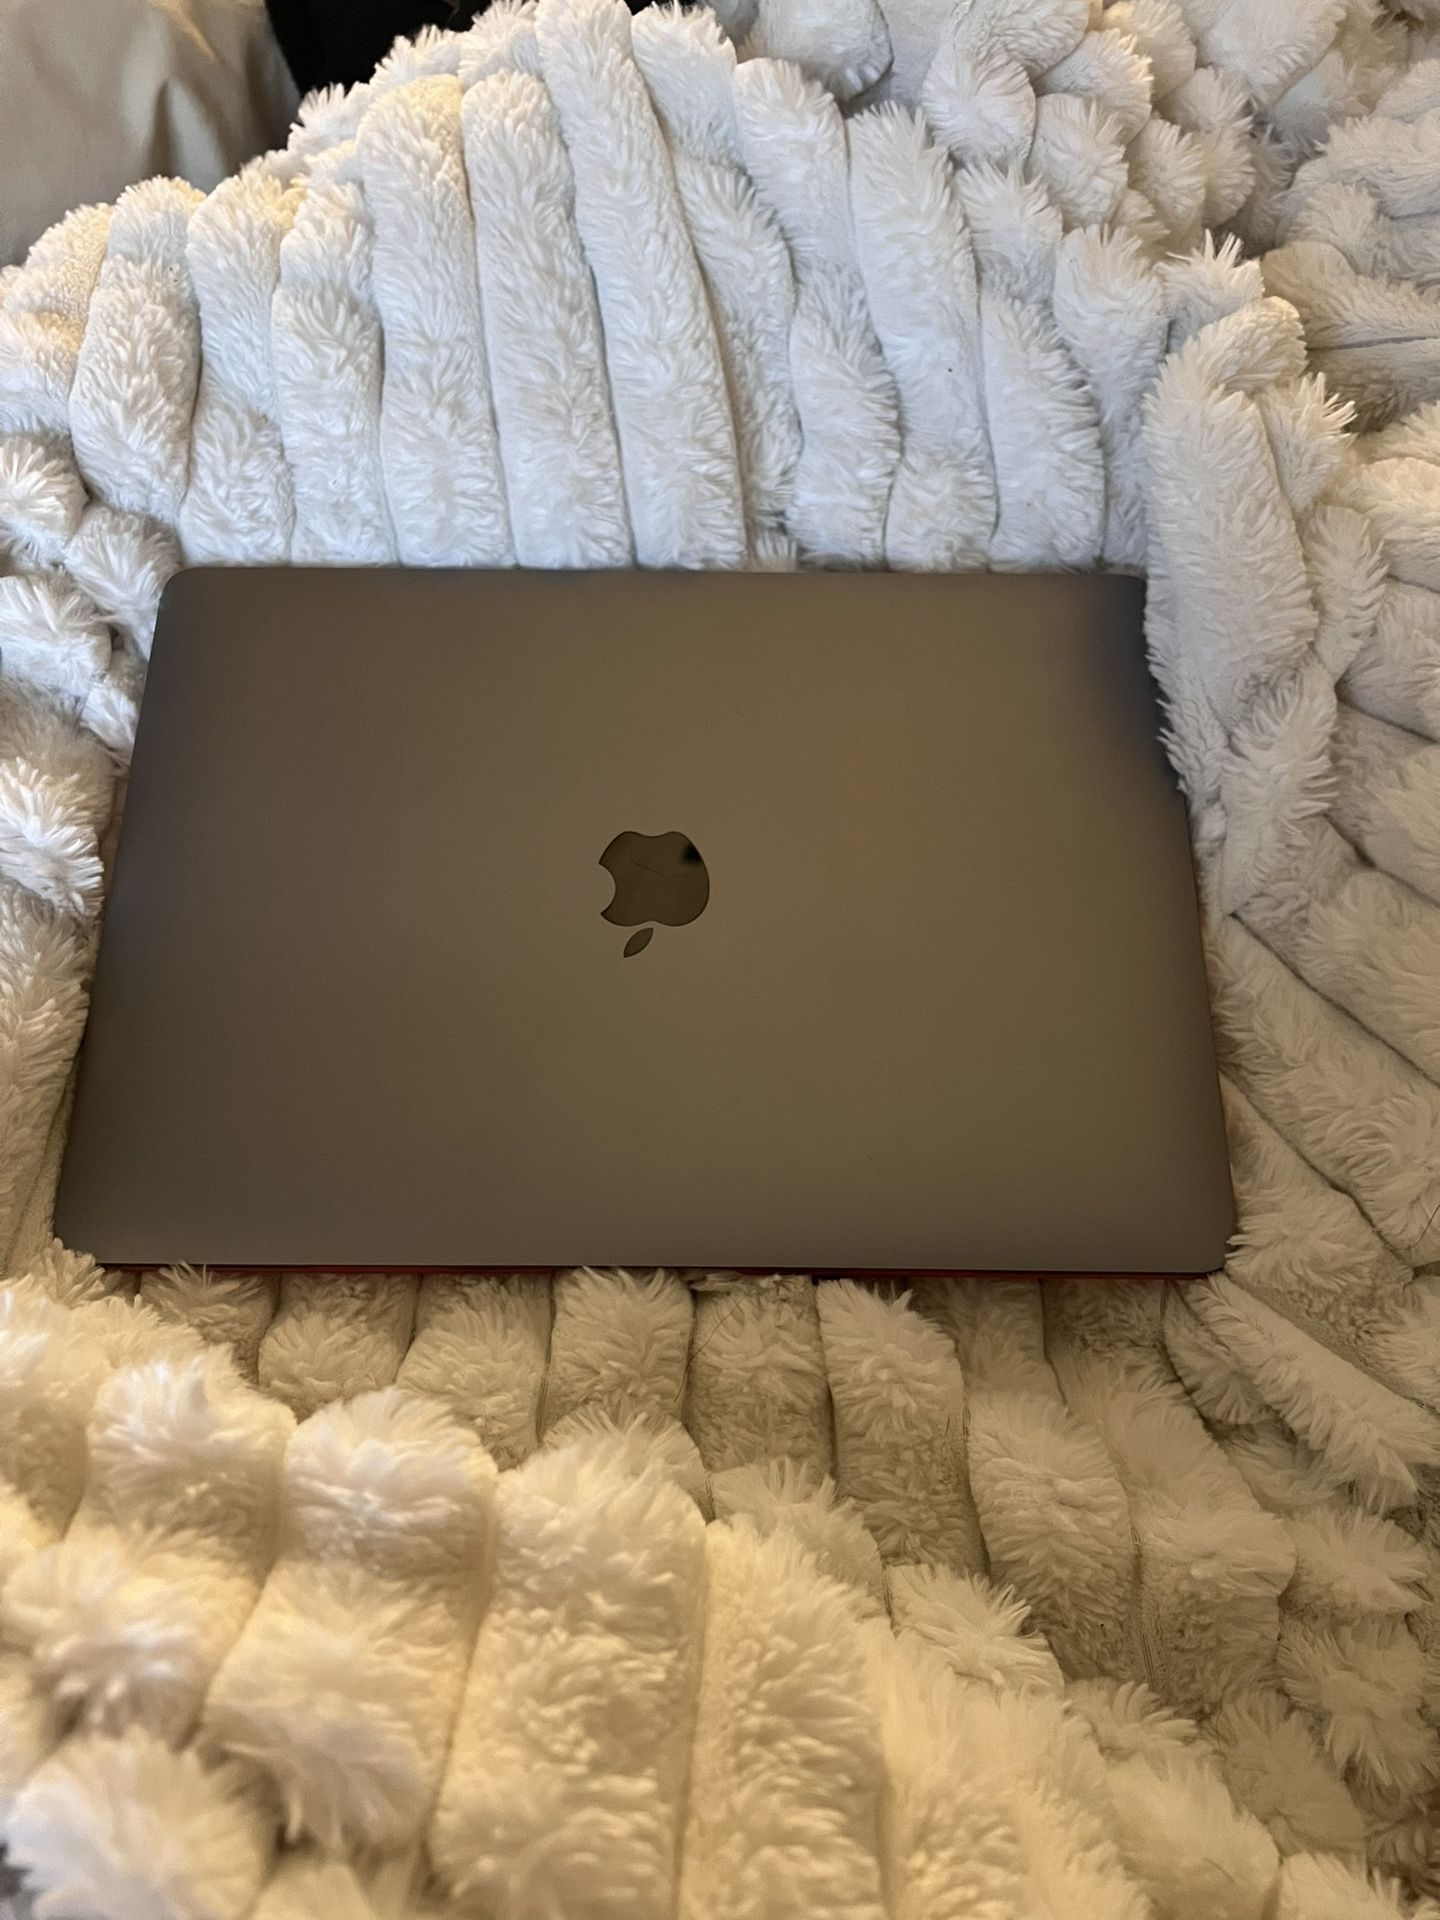 2018 Macbook Air (Refurbished)